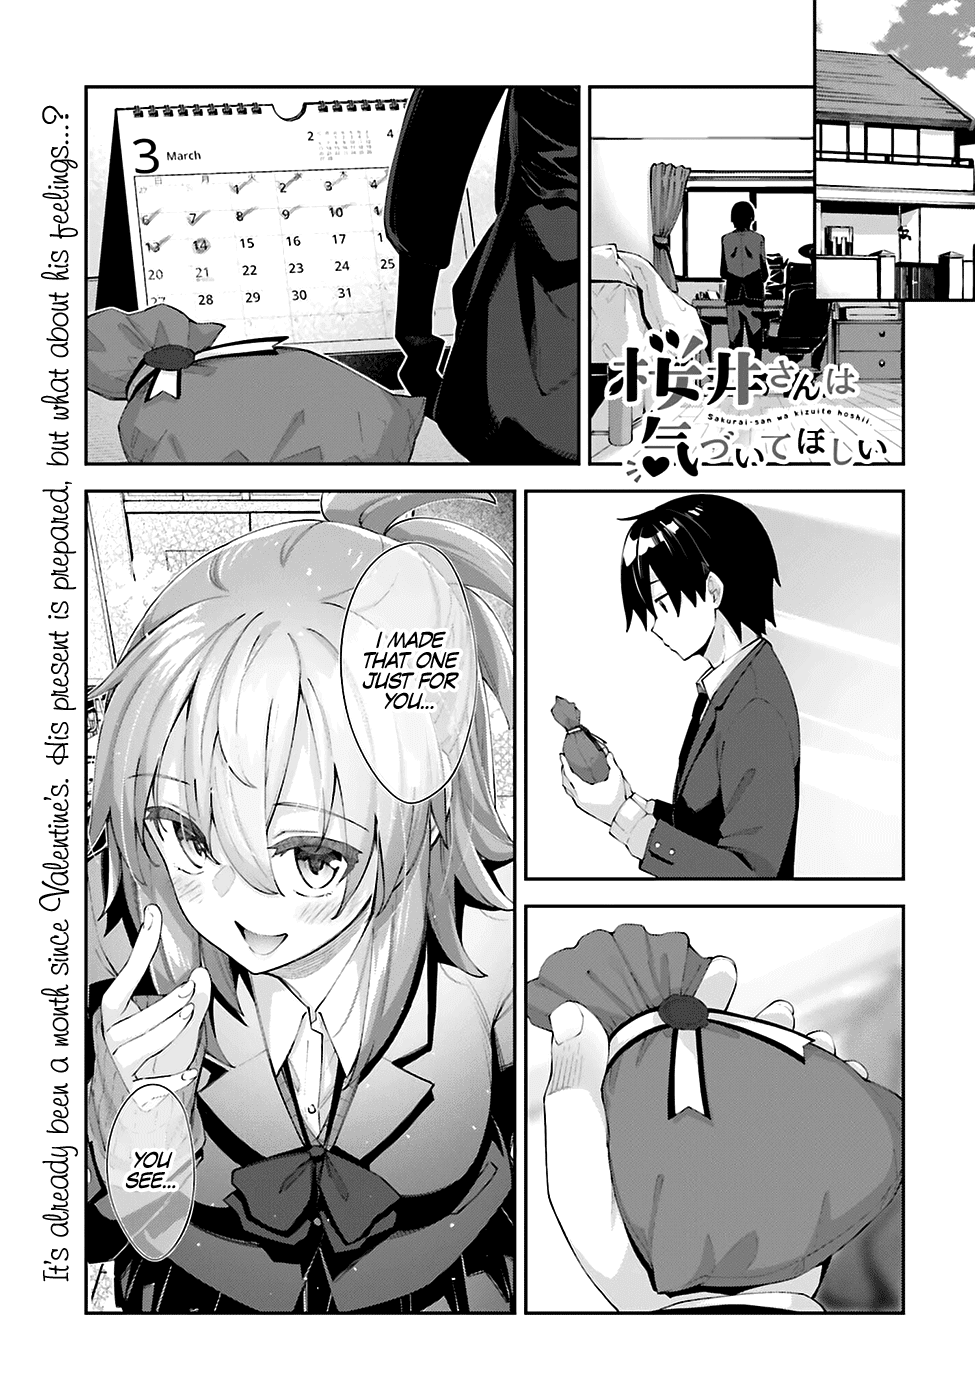 Sakurai-san Wants To Be Noticed - chapter 24 - #2